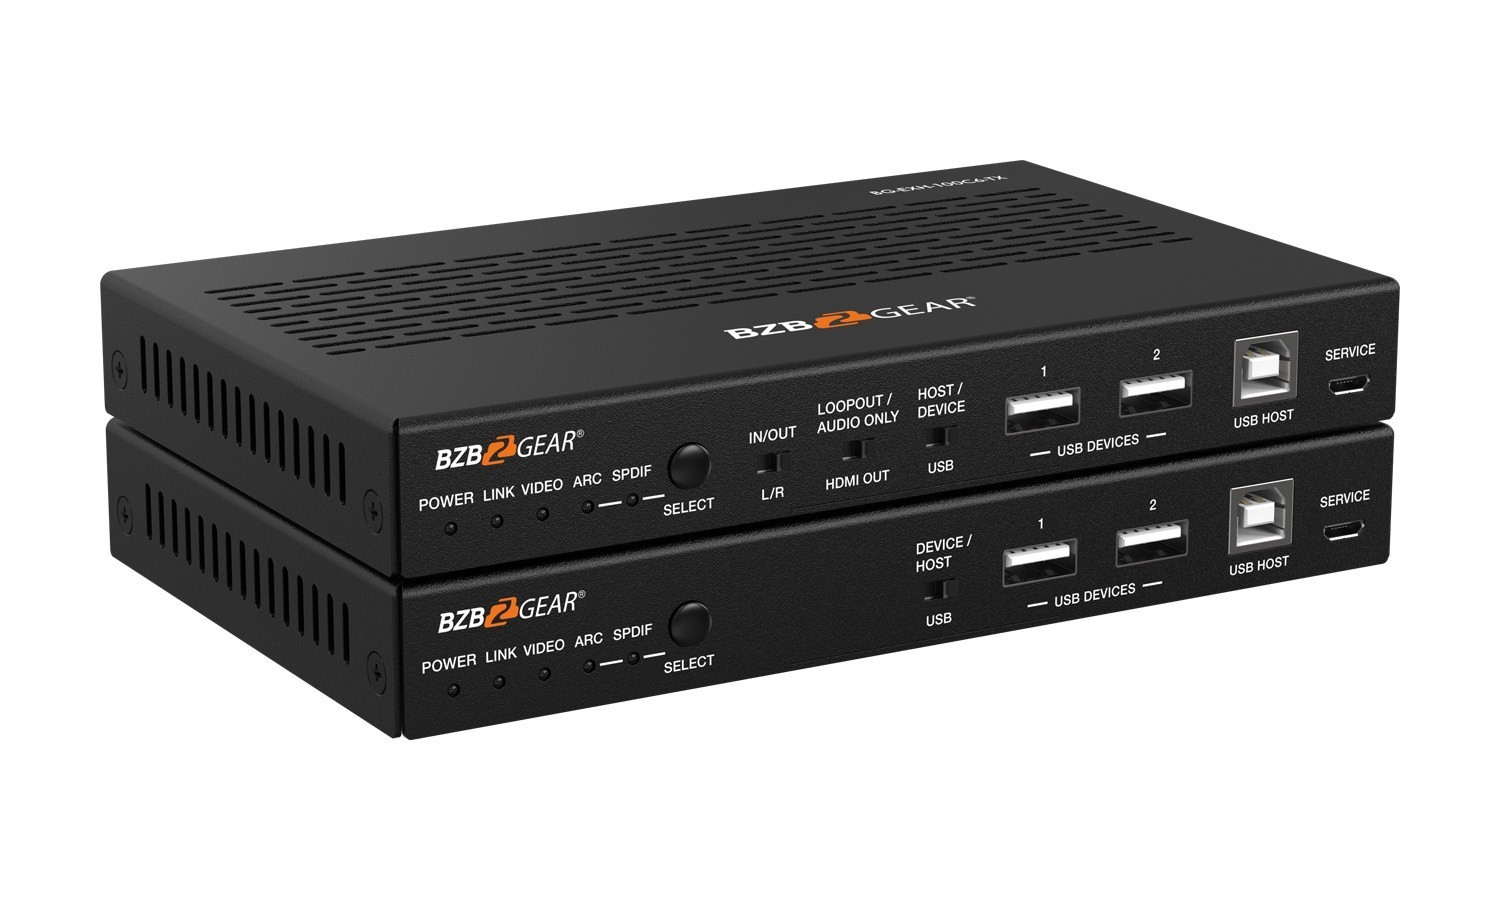 BZBGEAR BG-EXH-100C6 4K UHD HDMI/HDBaseT 3.0 Extender with IR/eARC/ARC/PoC/RS-232/Ethernet/USB and Audio Embedding/De-embedding up to 330ft